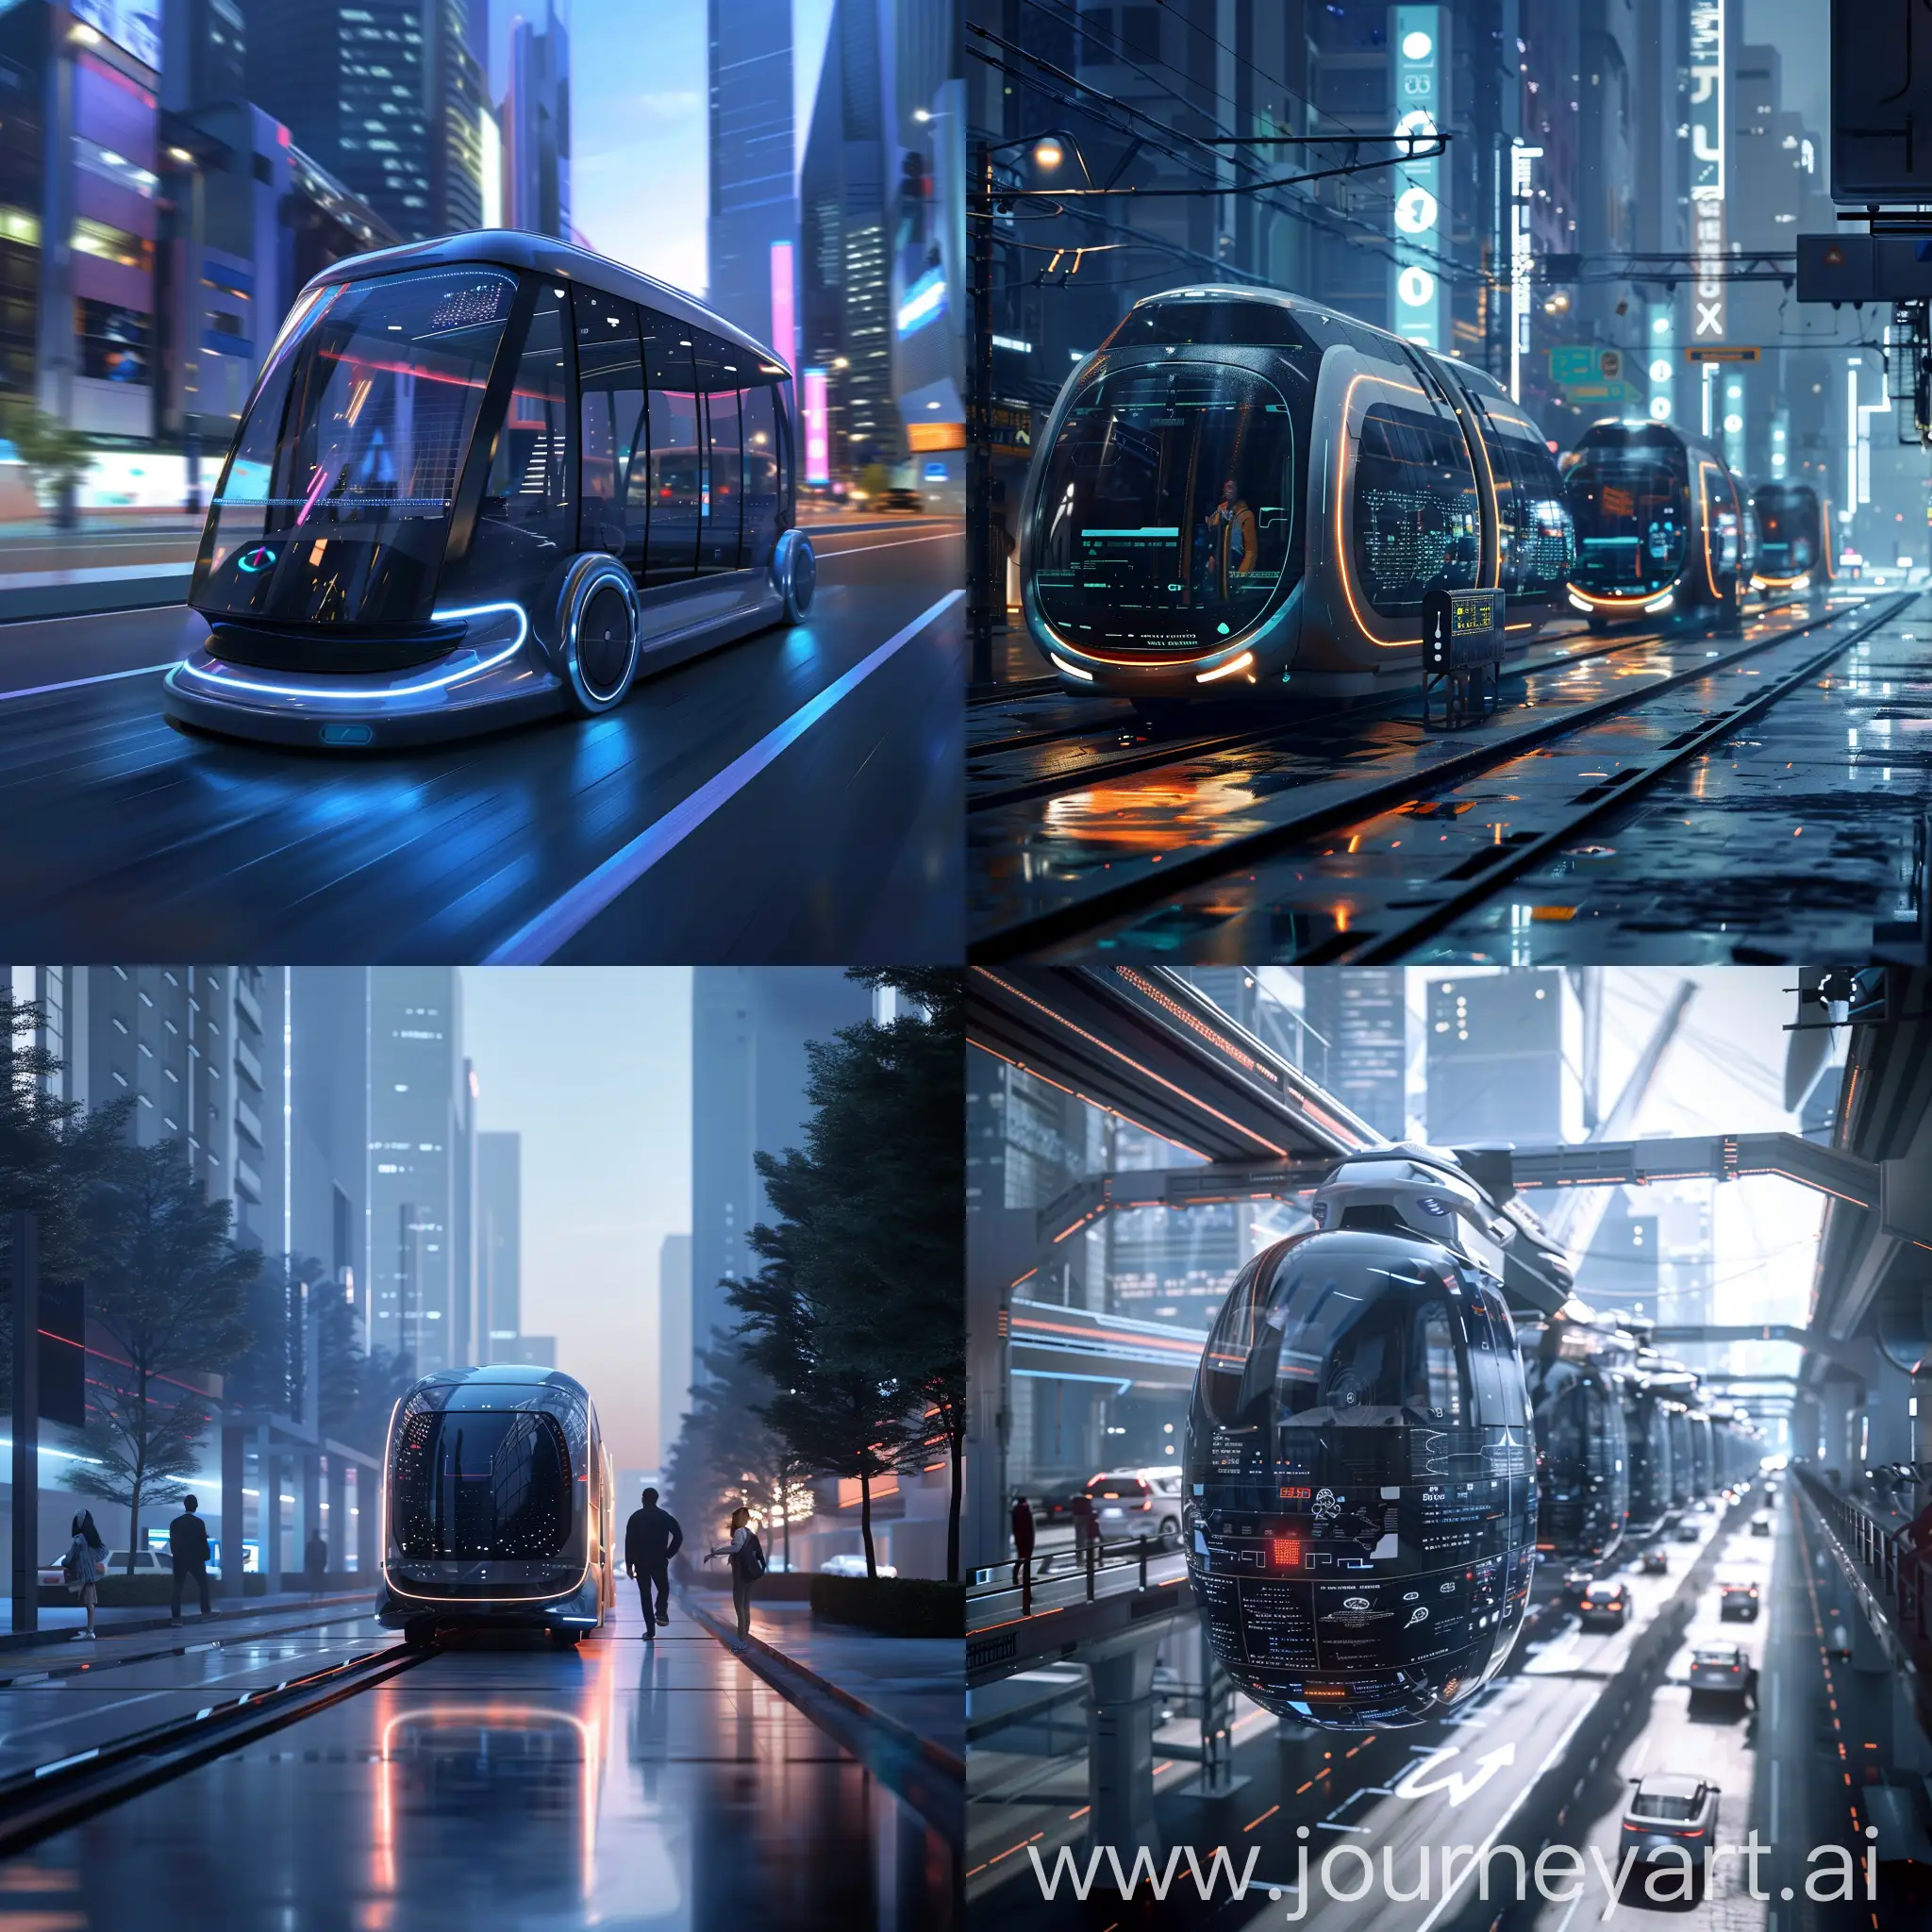 future urban transportation, showcasing advancement of digitalization and artificial intelligence.